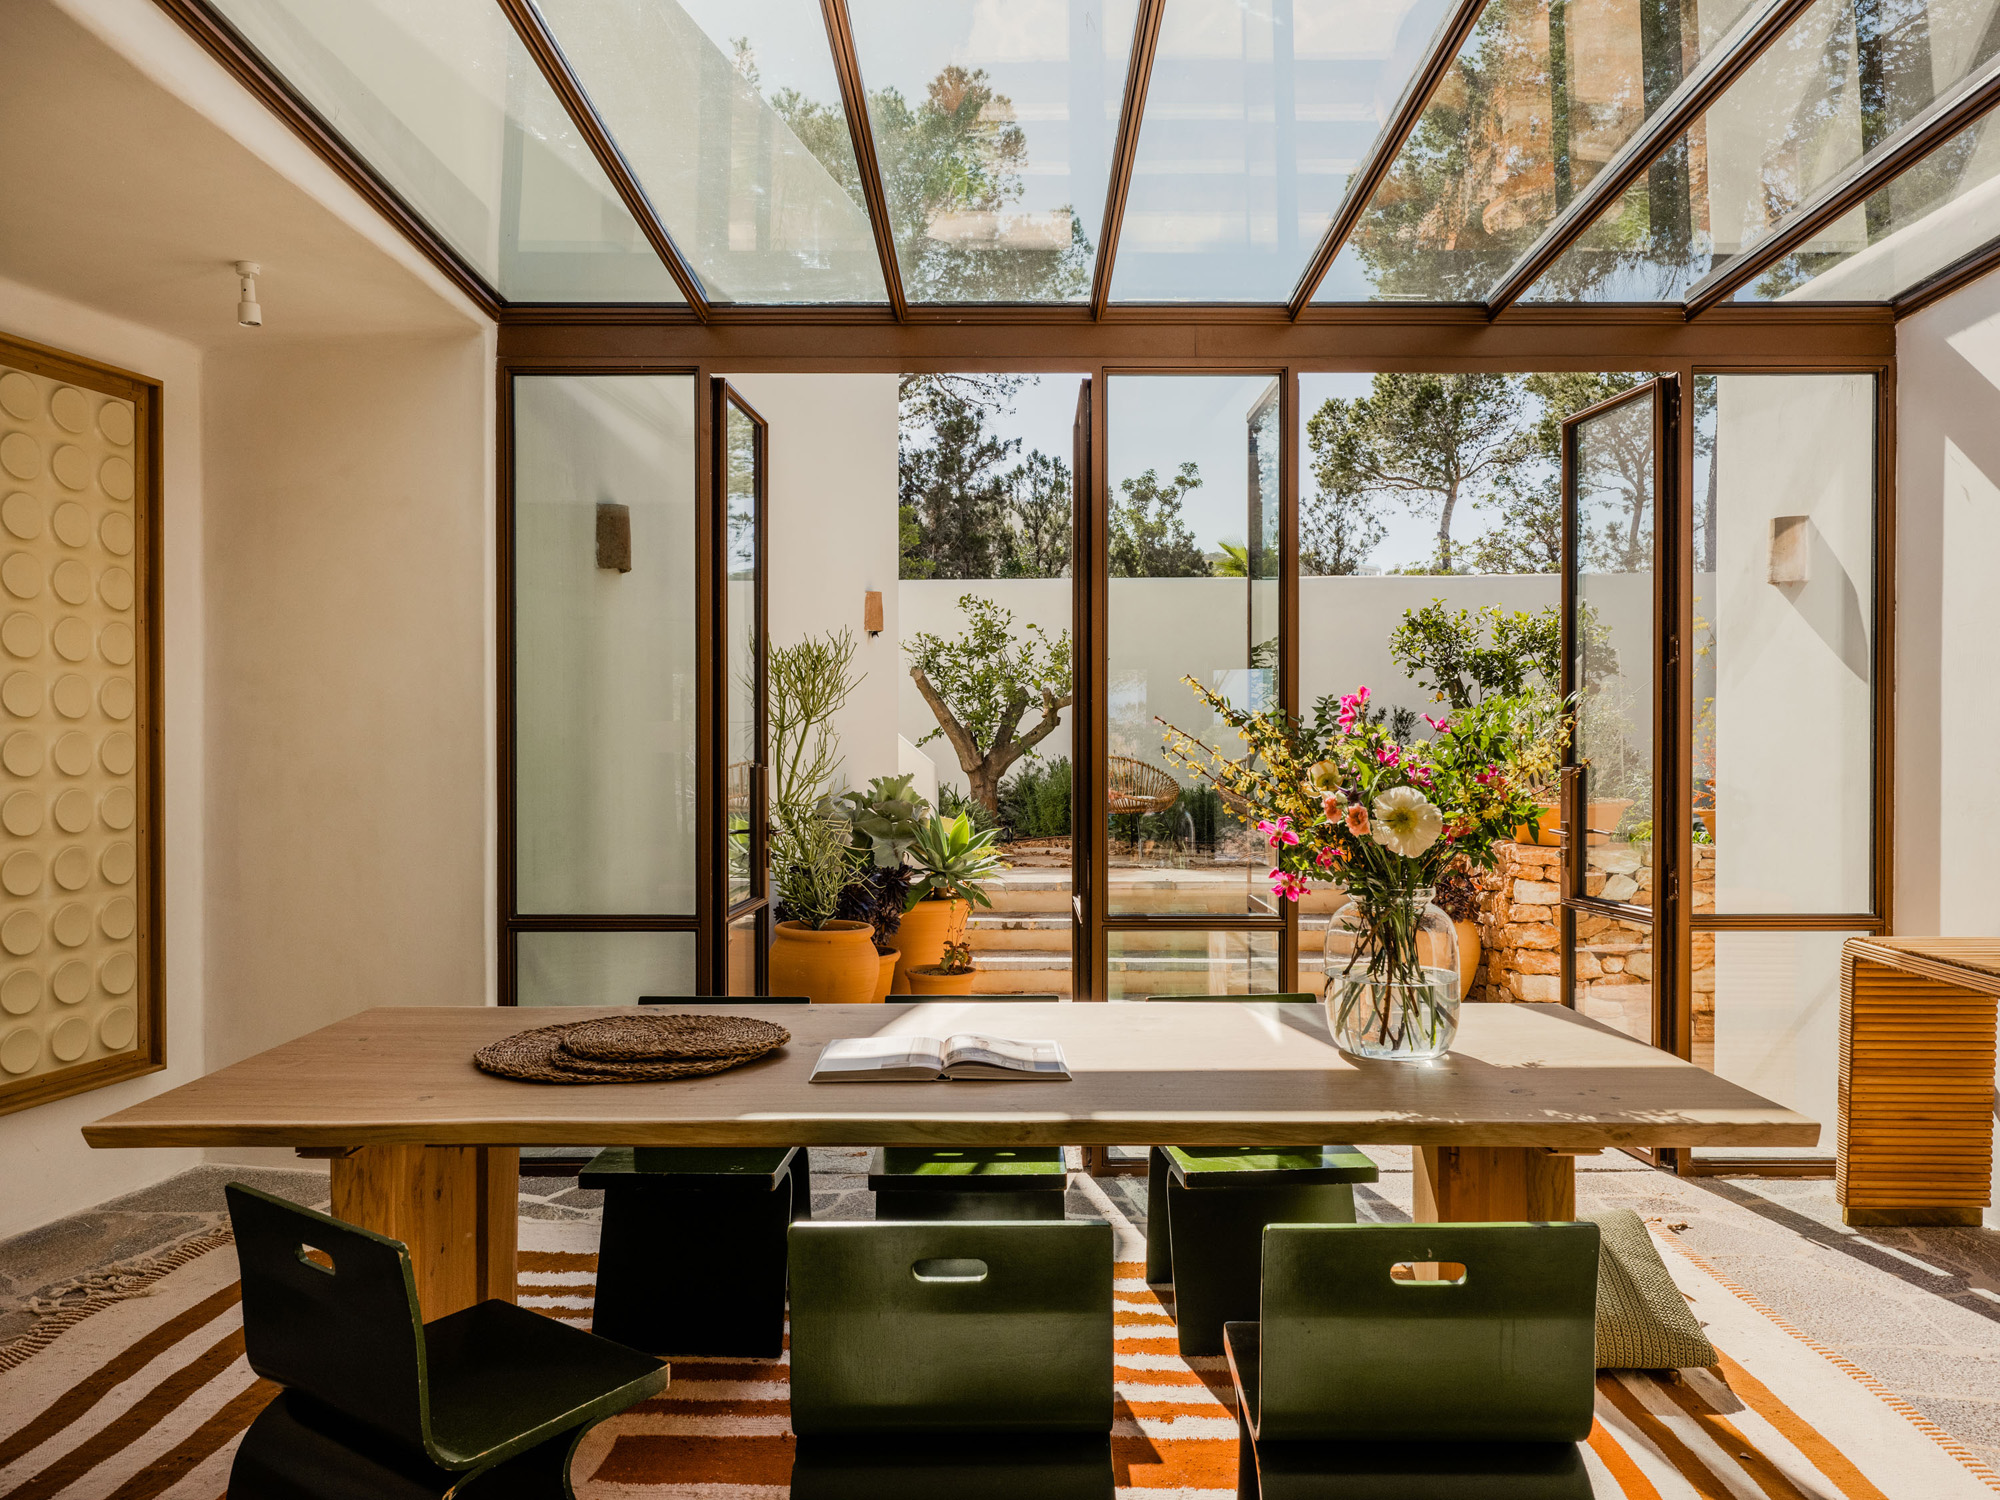 Ibiza Interiors contemporary and rustic interior design in Ibiza: Dining Room Cala Moli